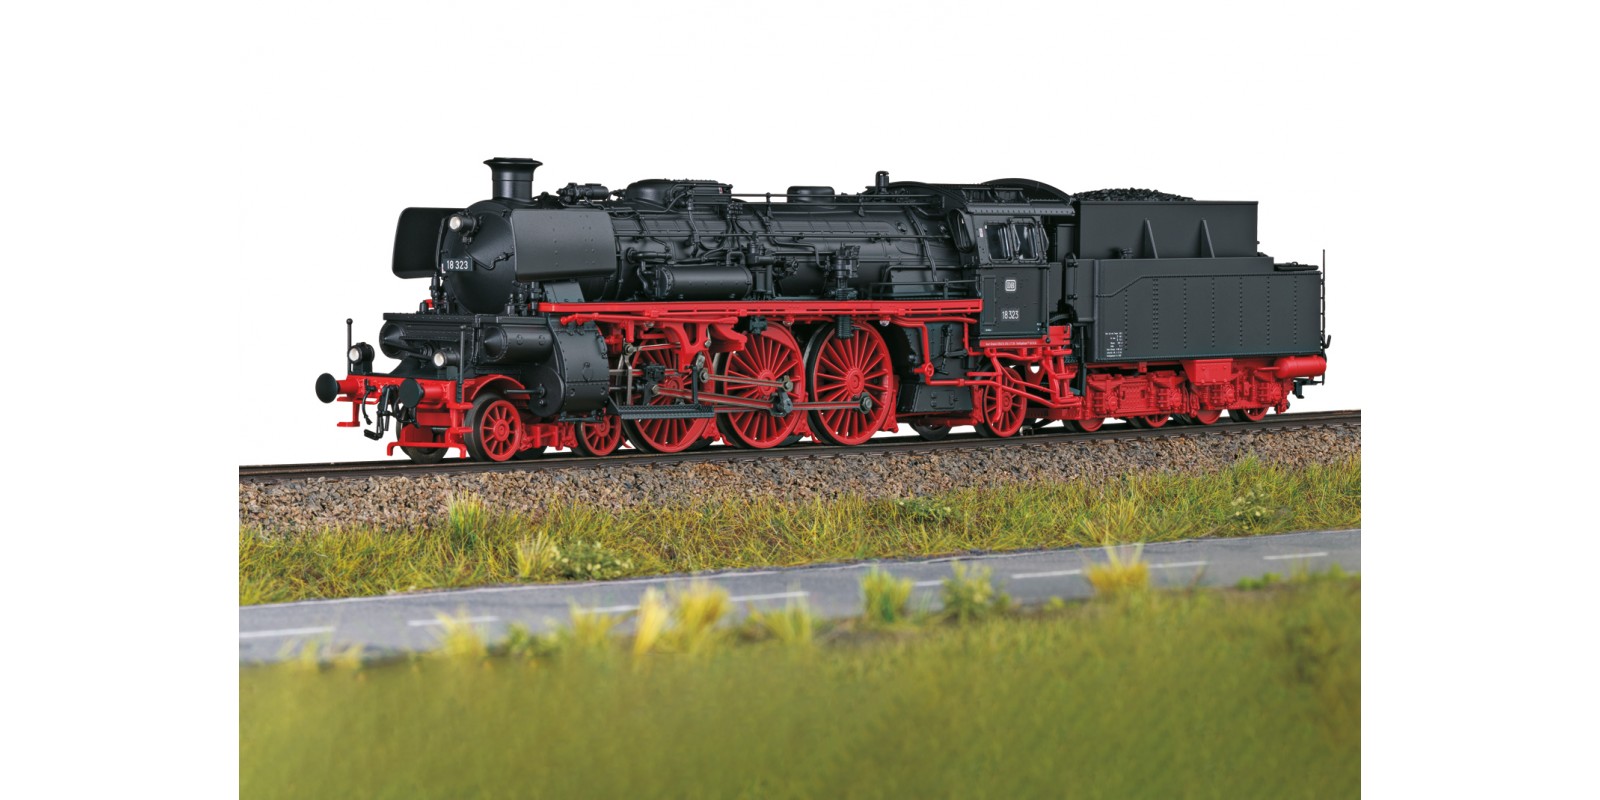 38323 Steam Locomotive, Road Number 18 323